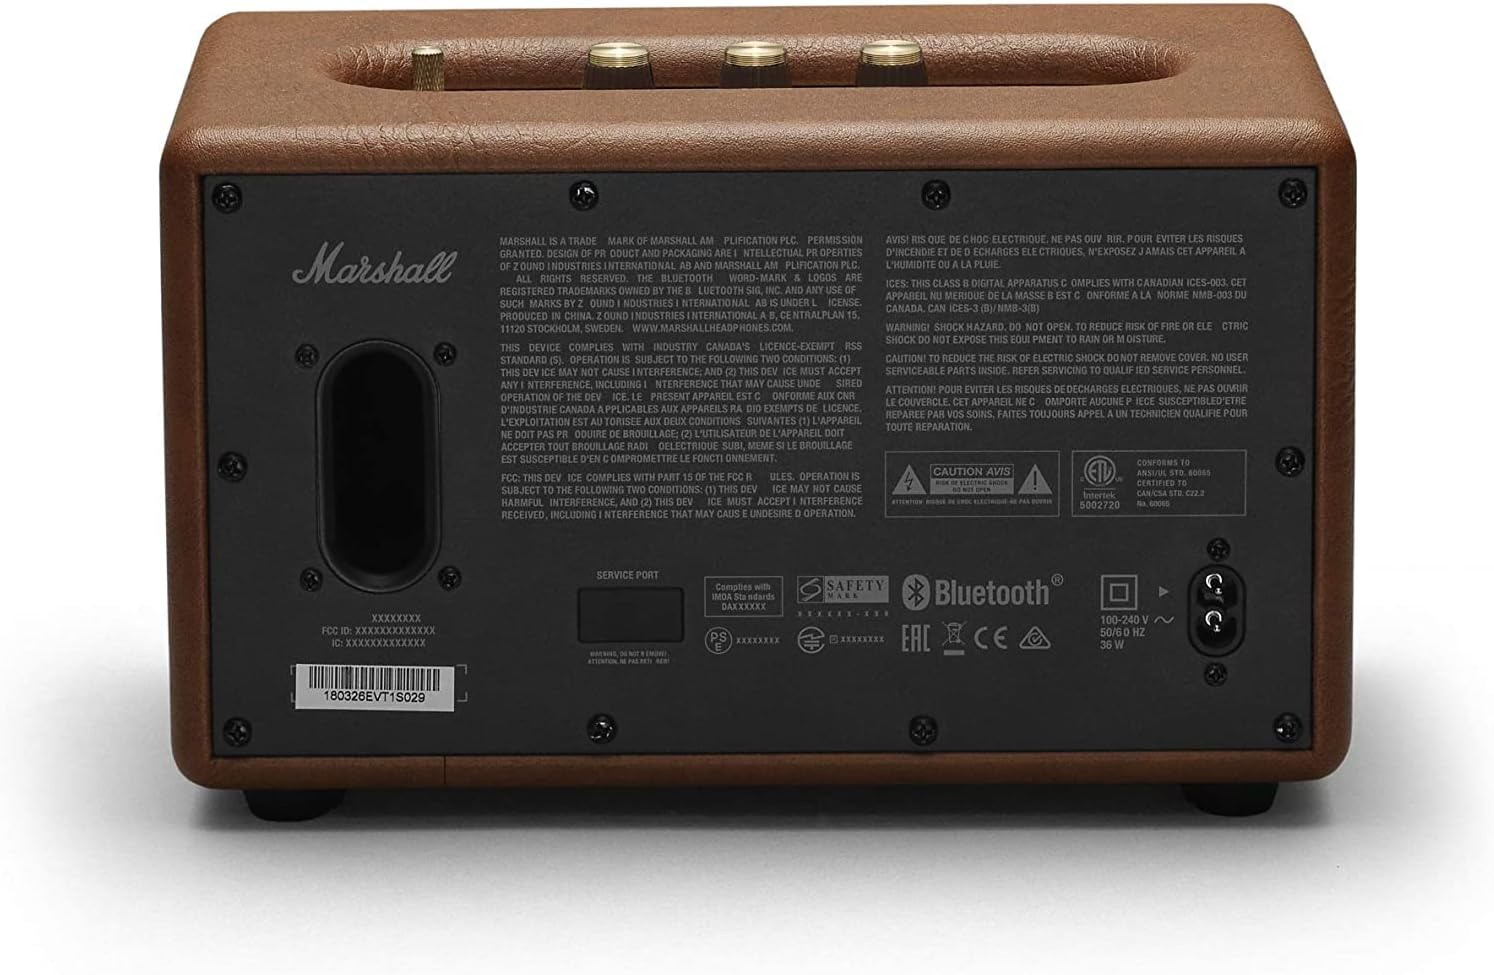 Marshall Acton II Bluetooth Wireless Stereo Speaker -  International Warranty